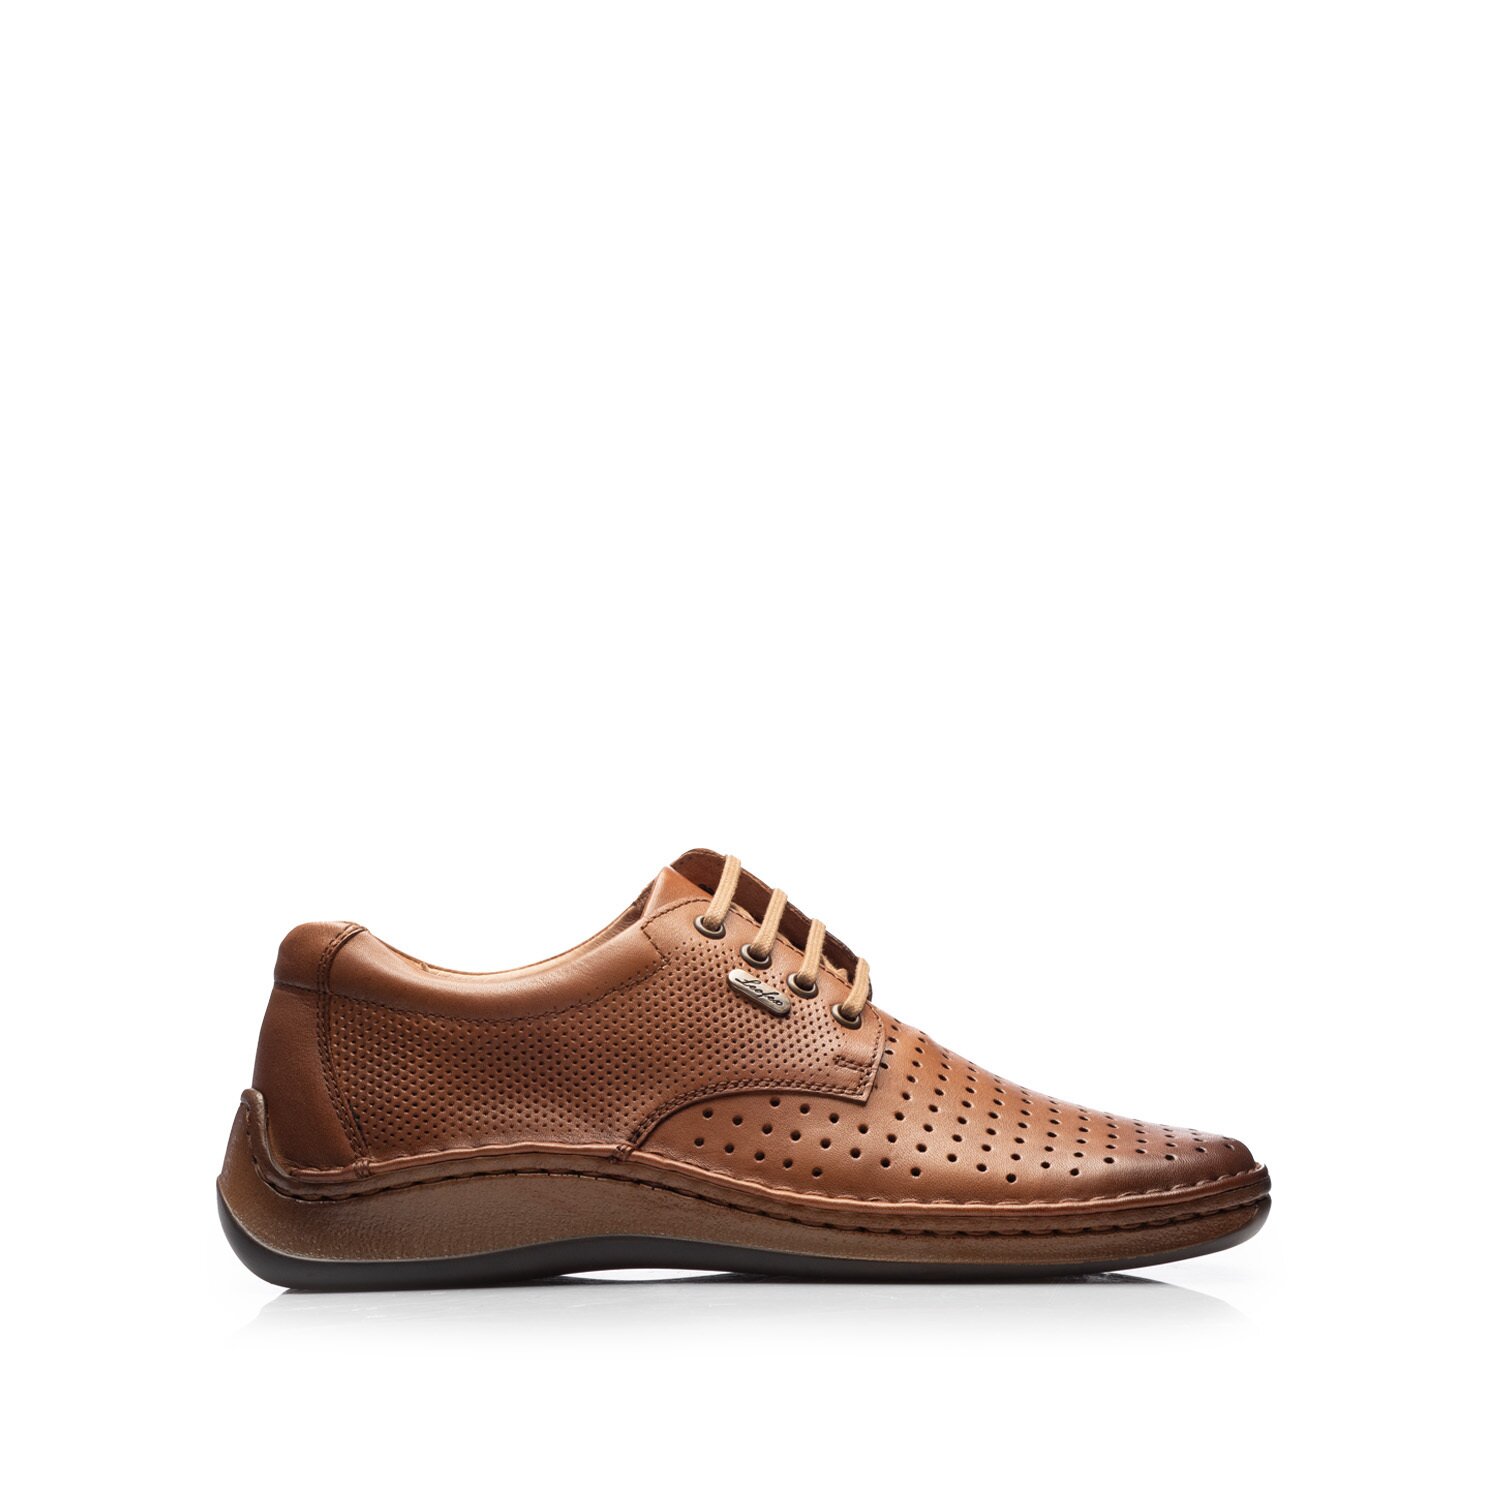 Pantofi casual barbati din piele naturala,Leofex-594 Camel Box